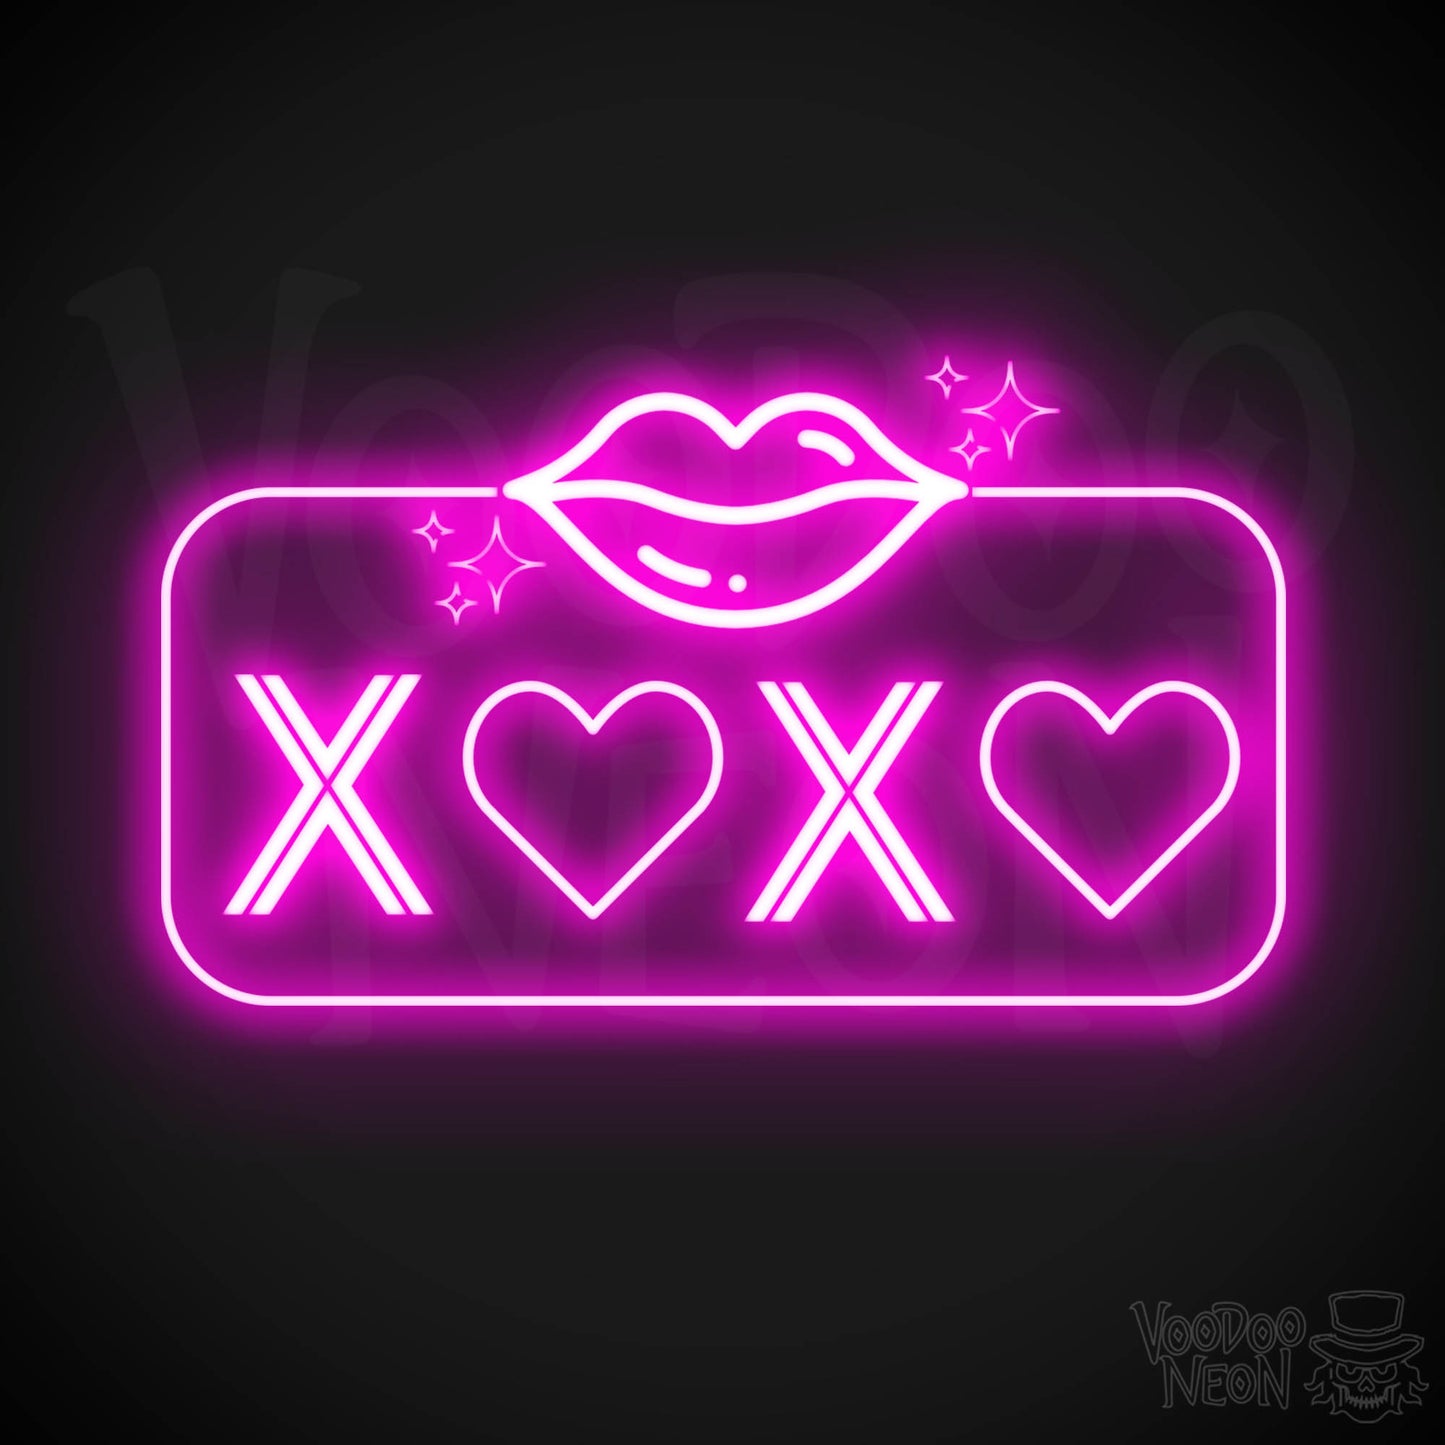 Xoxo Neon Sign - Neon XOXO - Kiss Hug Neon Wall Art - Color Pink